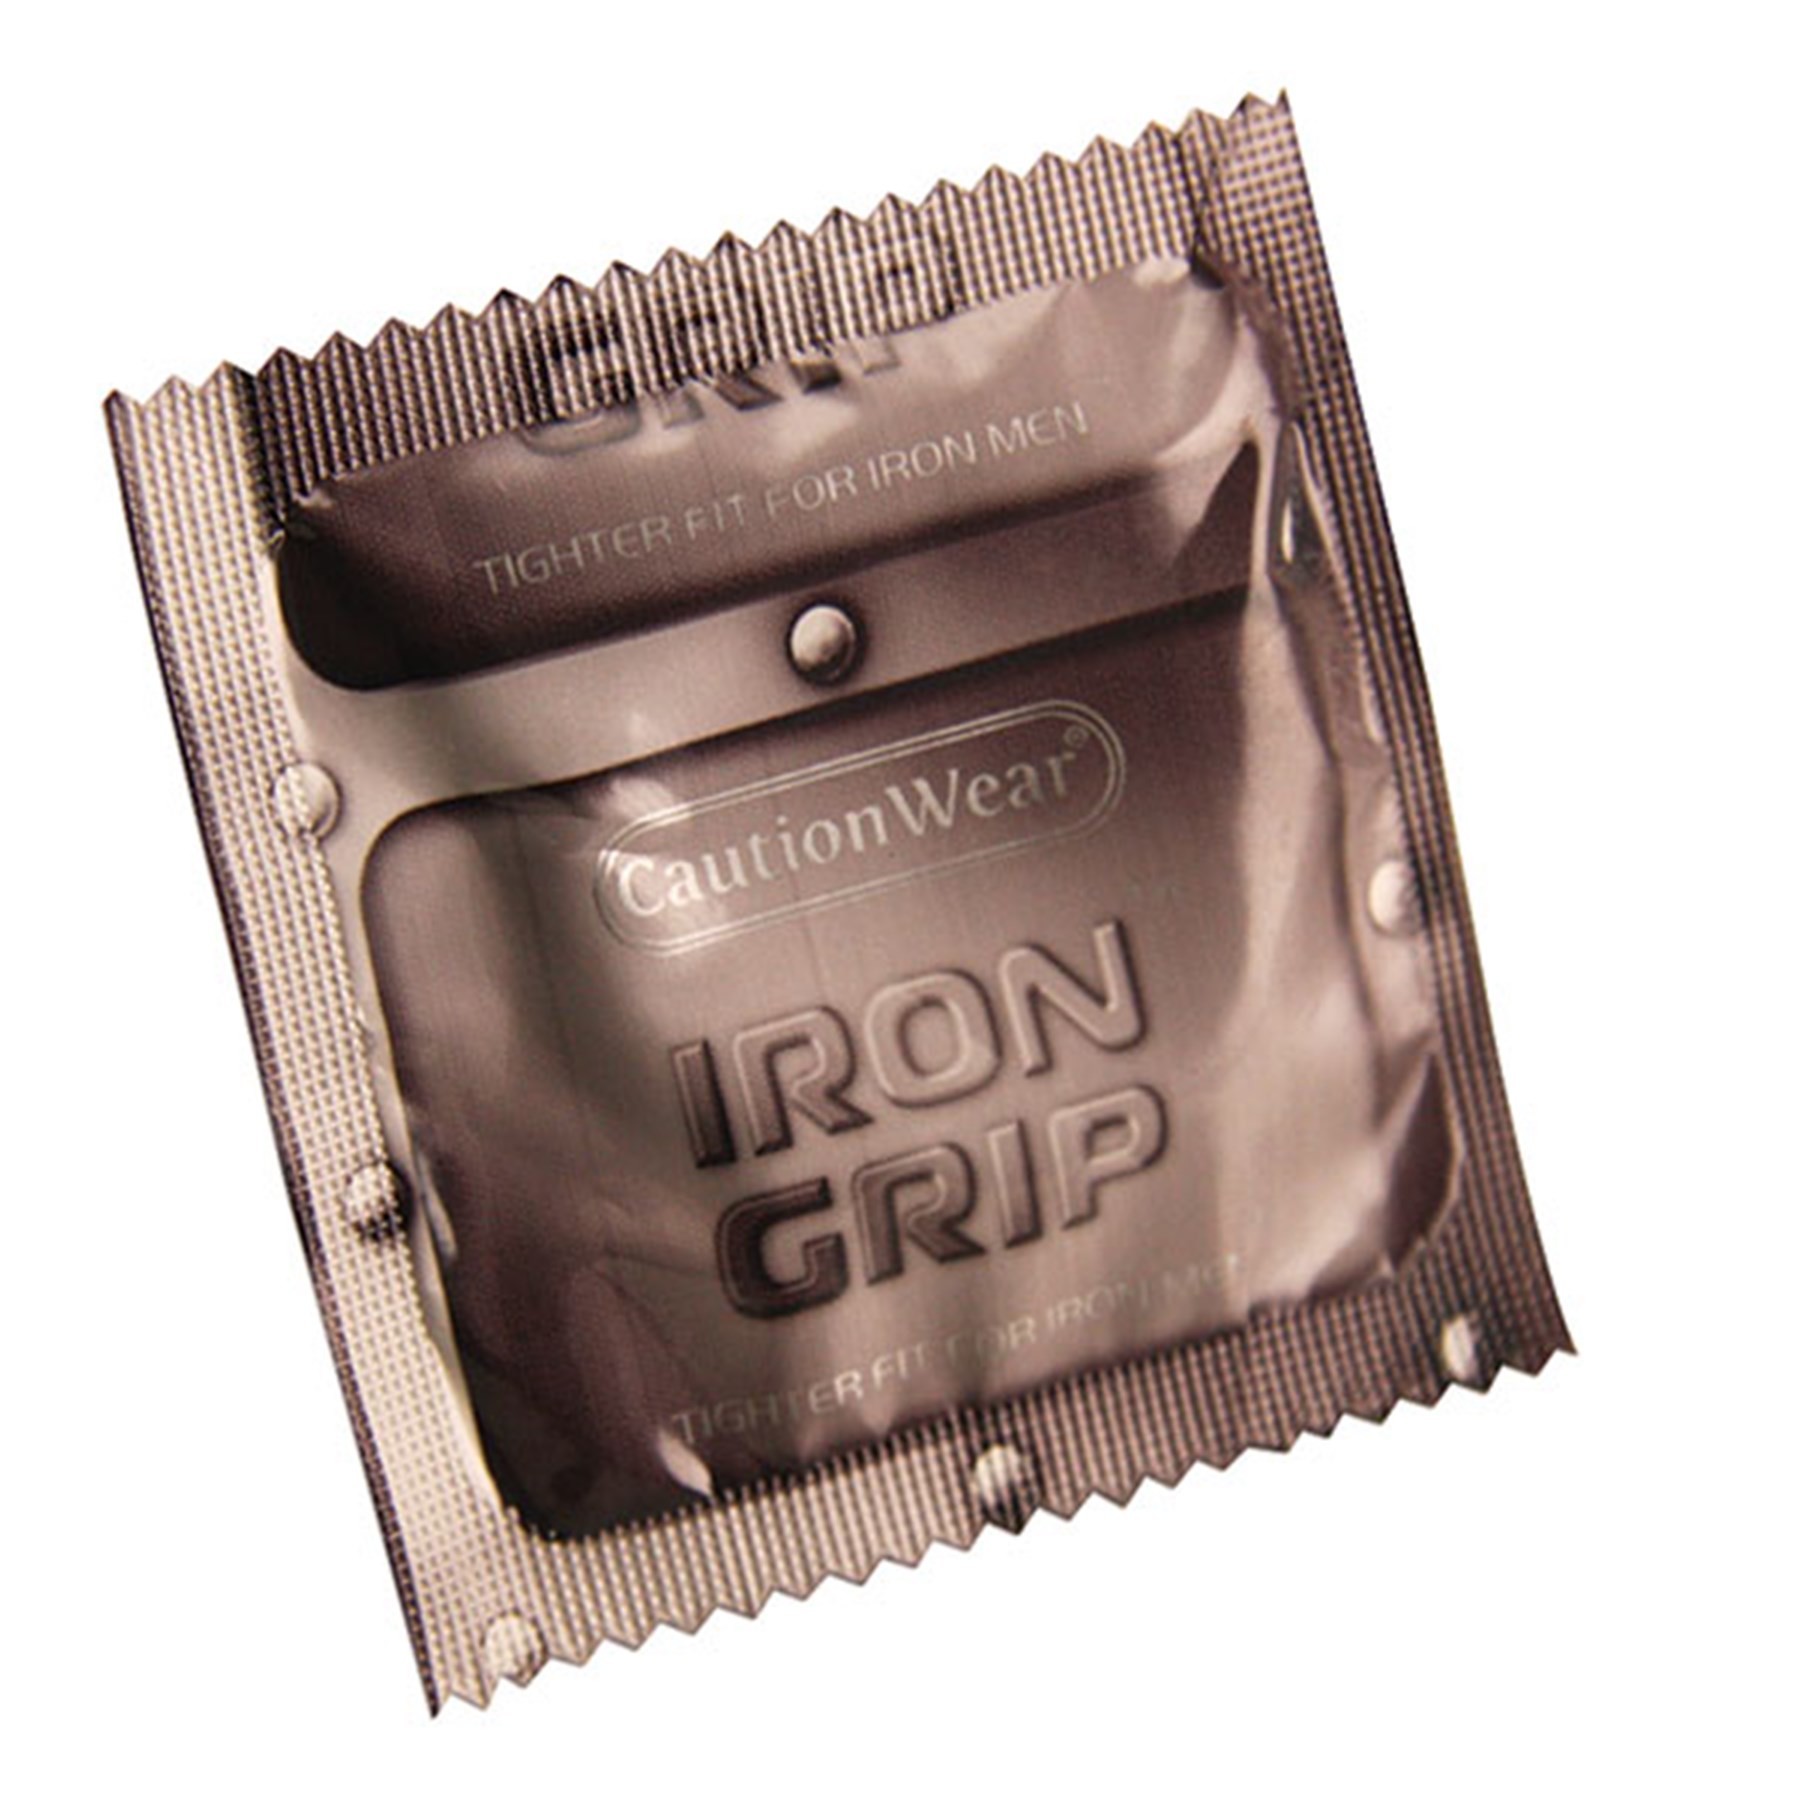 Iron Grip Condom